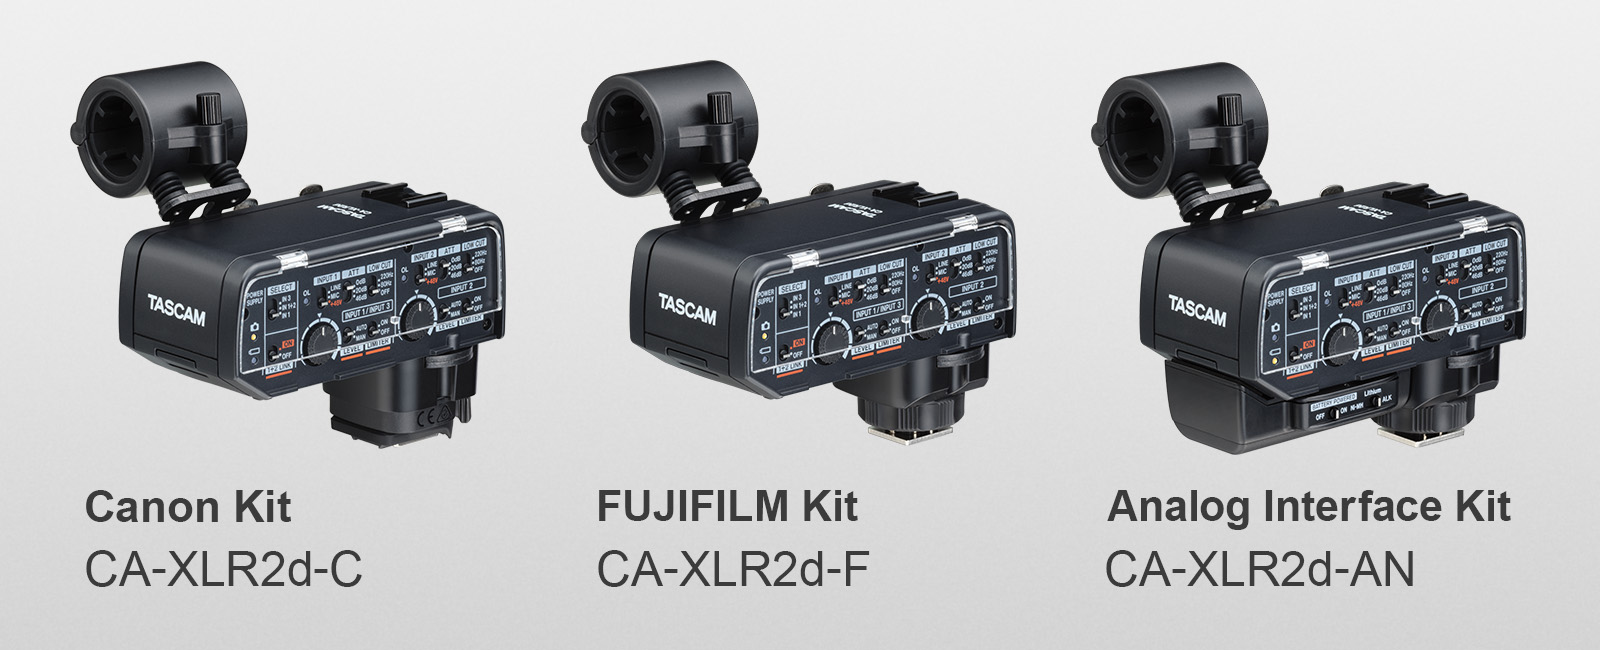 Development of new TASCAM XLR audio adapter allows mirrorless cameras in collaboration